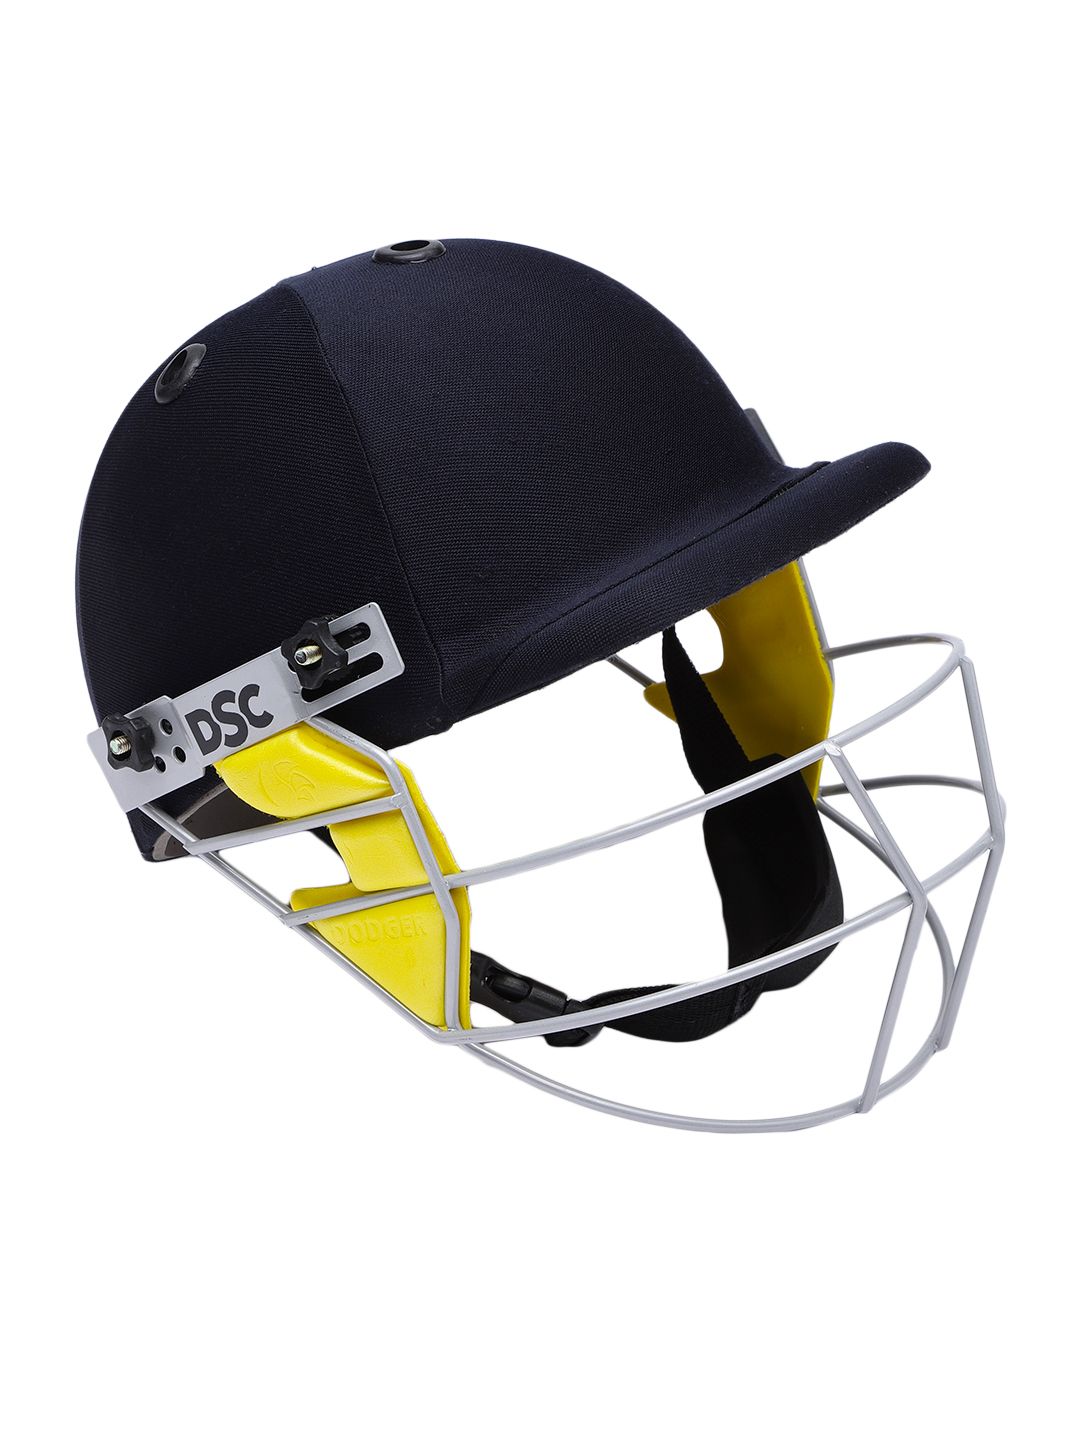 DSC Unisex Navy Blue & Yellow Dodger Cricket Helmet Price in India